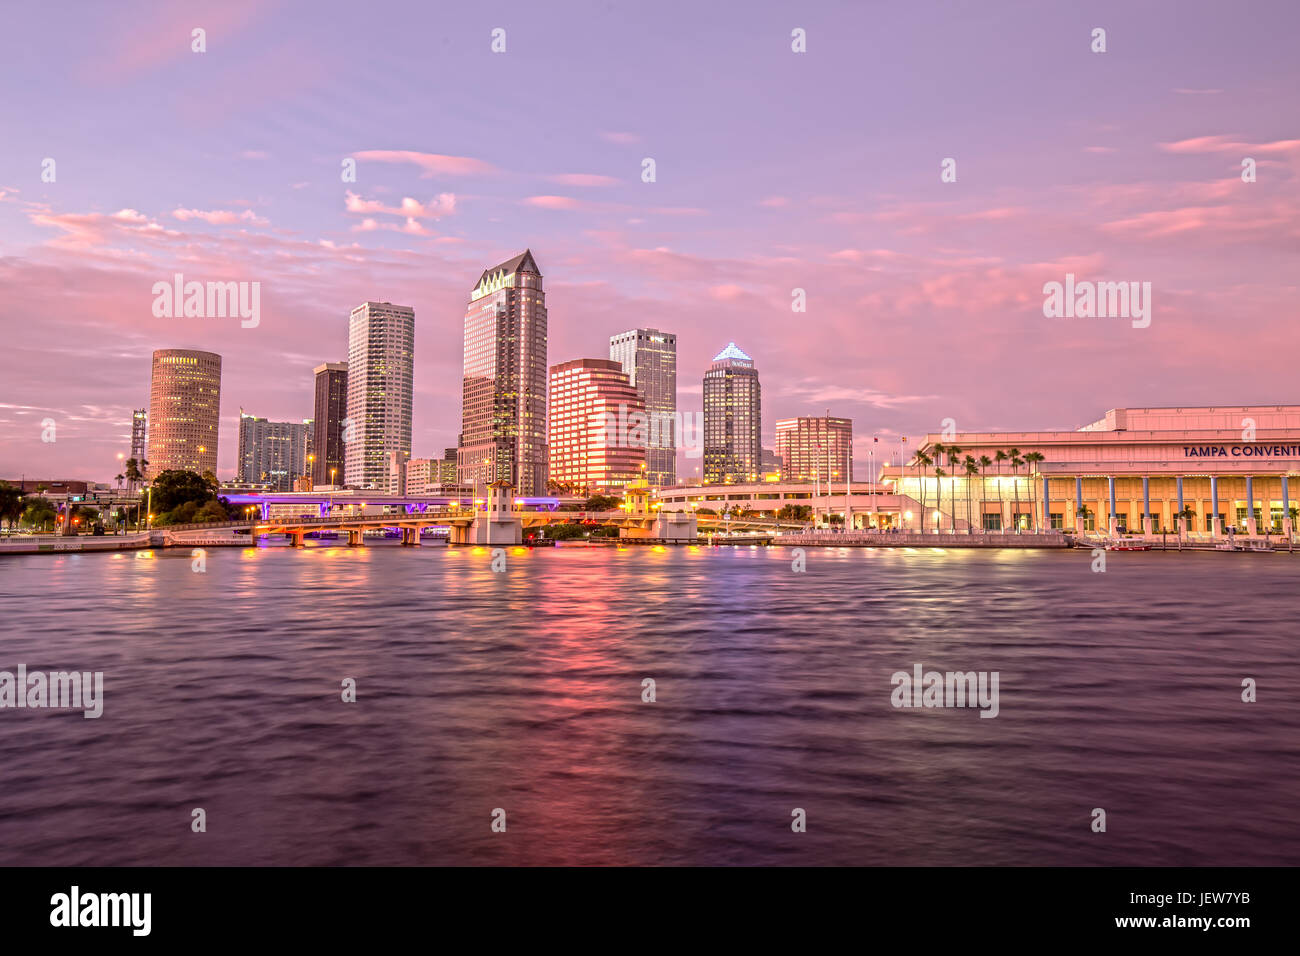 Centre-ville de Tampa Skyline at Sunset Banque D'Images